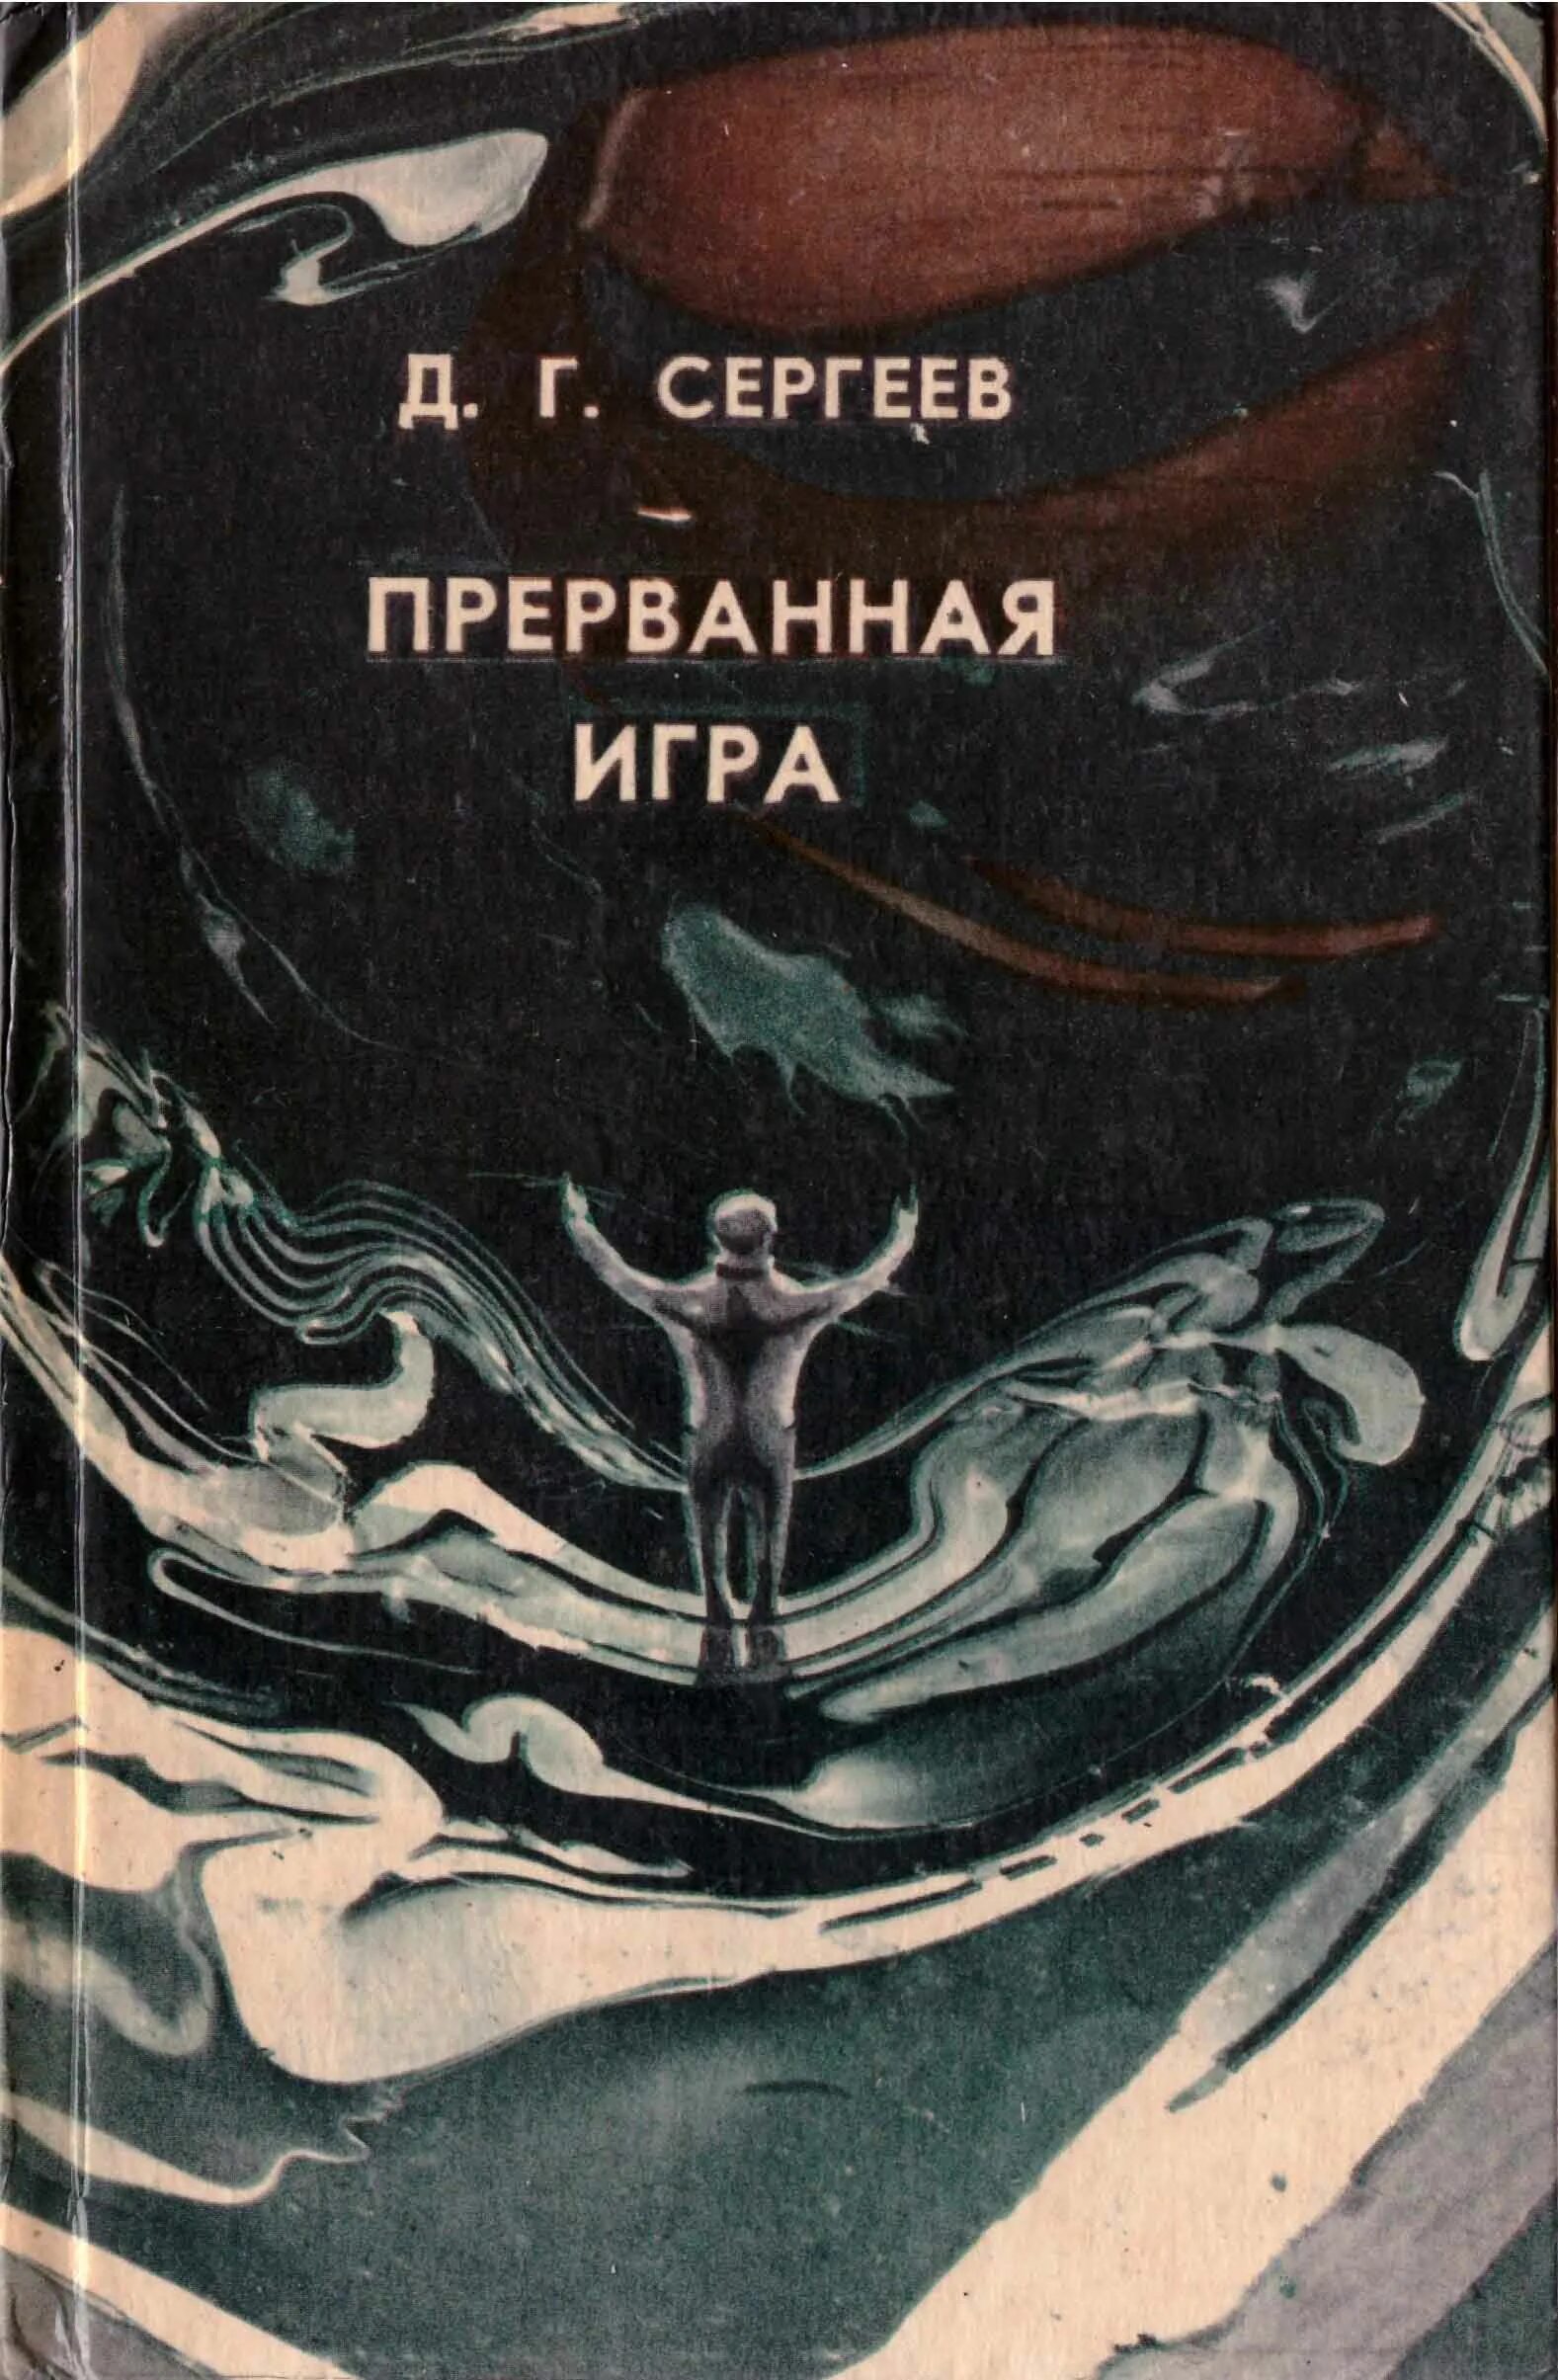 Книга 7 сергеев. Дмитрия Гавриловича Сергеева (1922–2000).